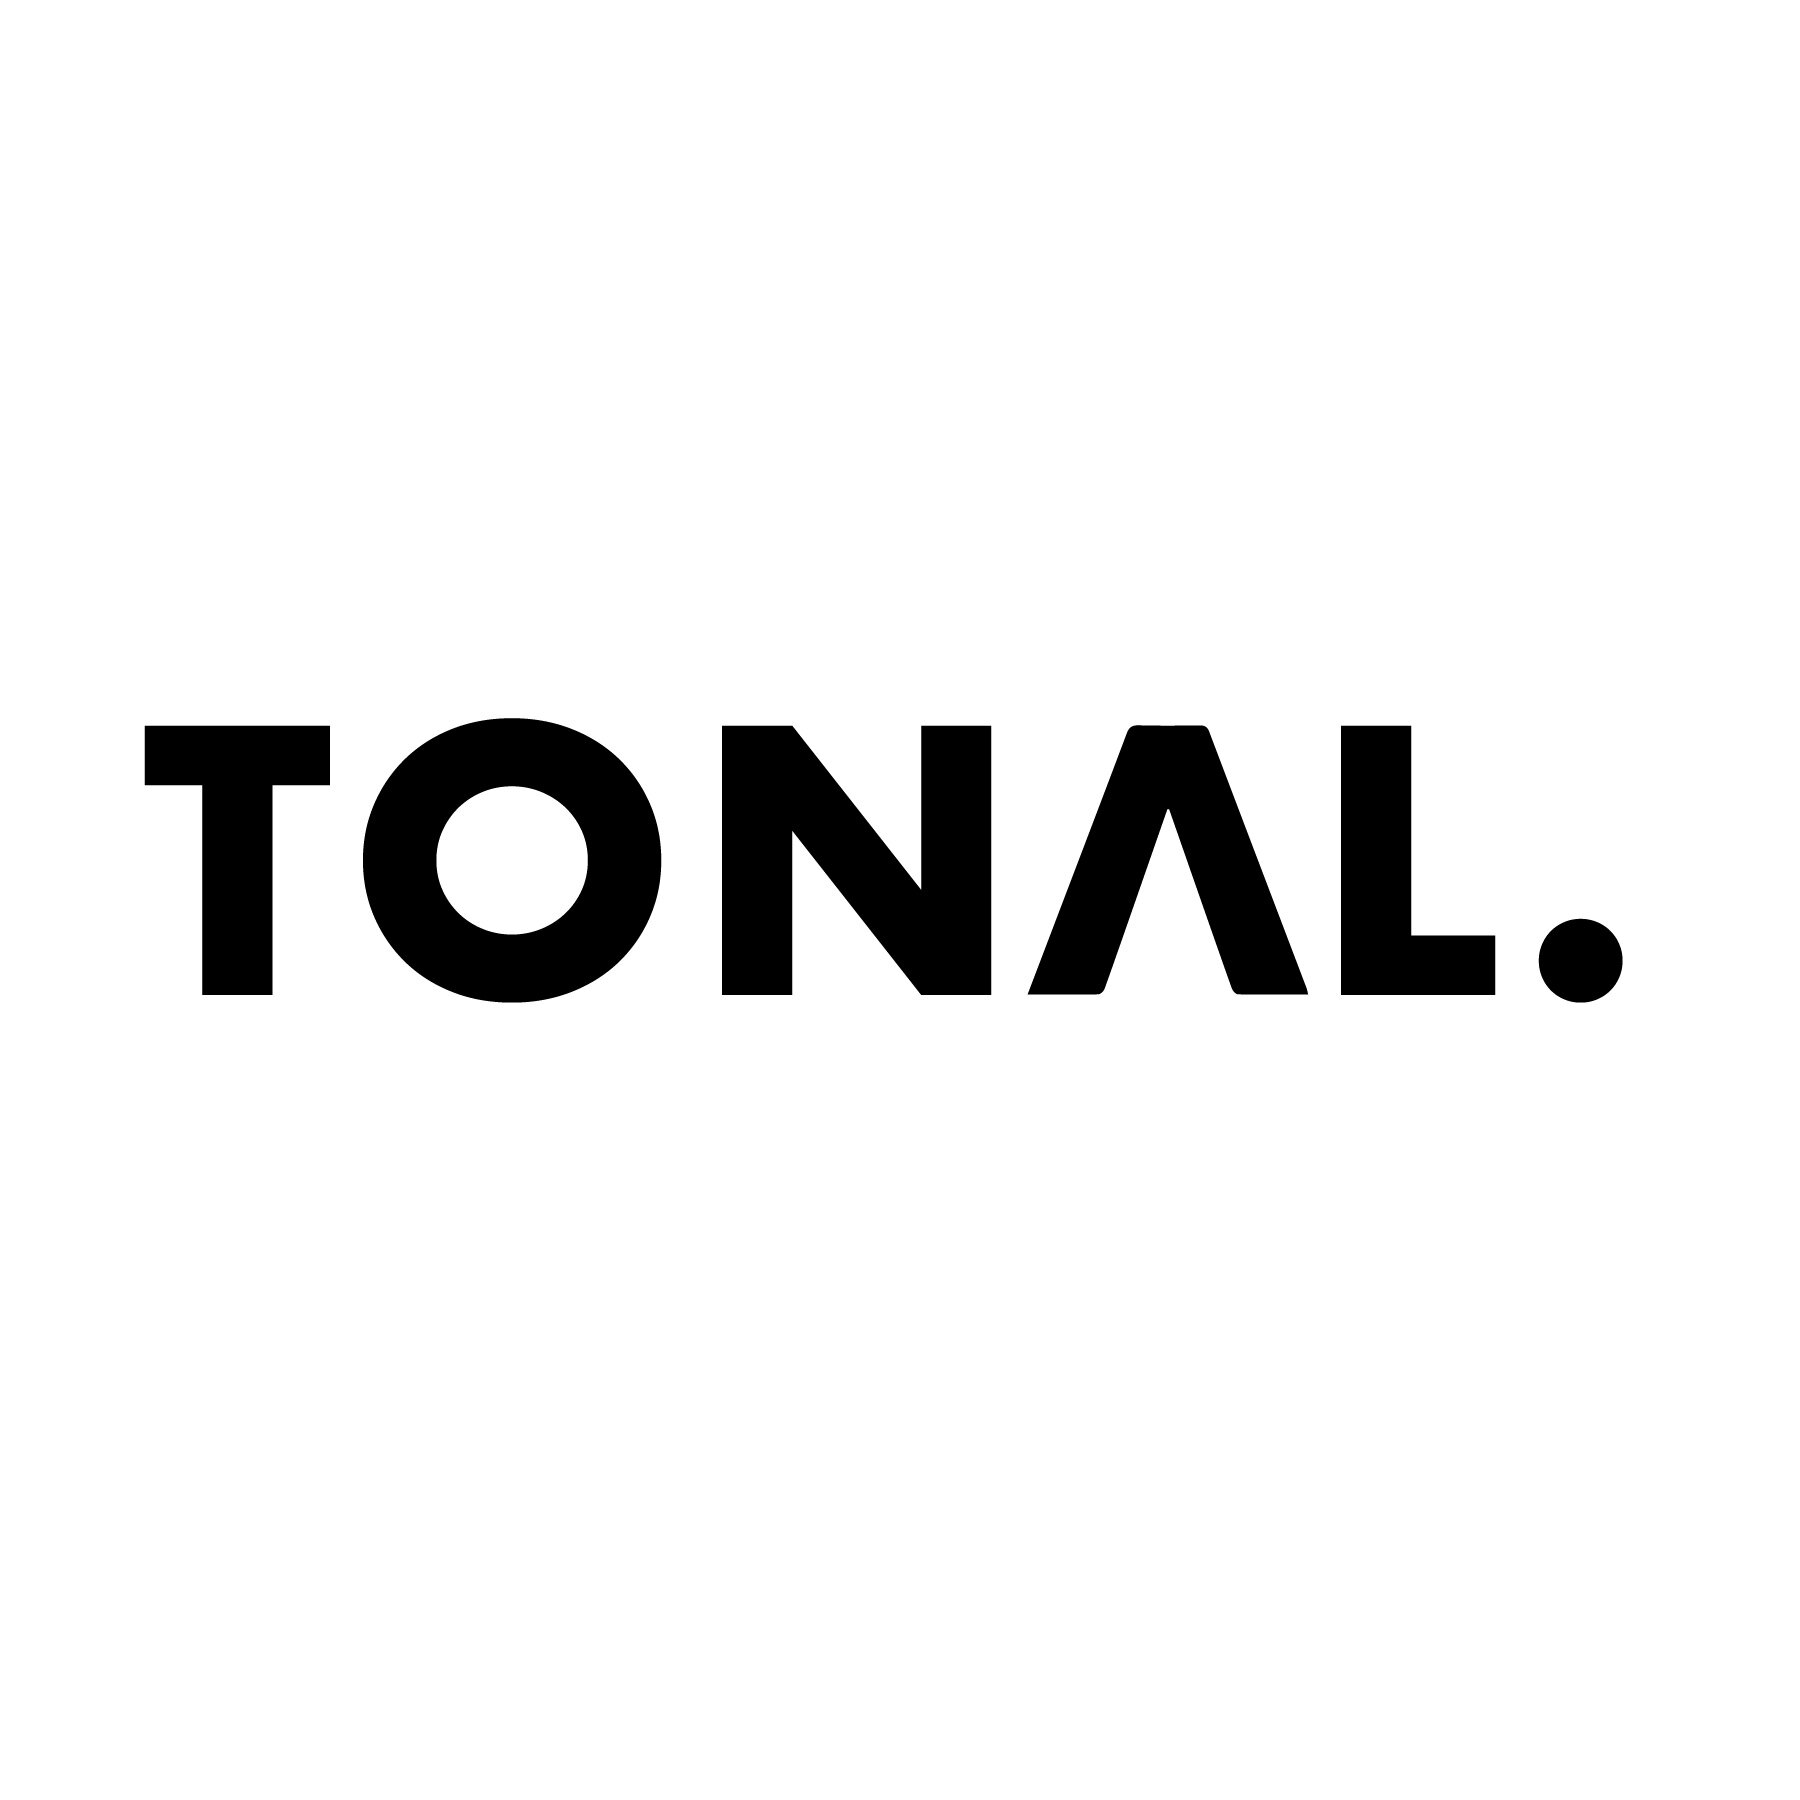 TONAL_LOGO_FINAL-04.jpg